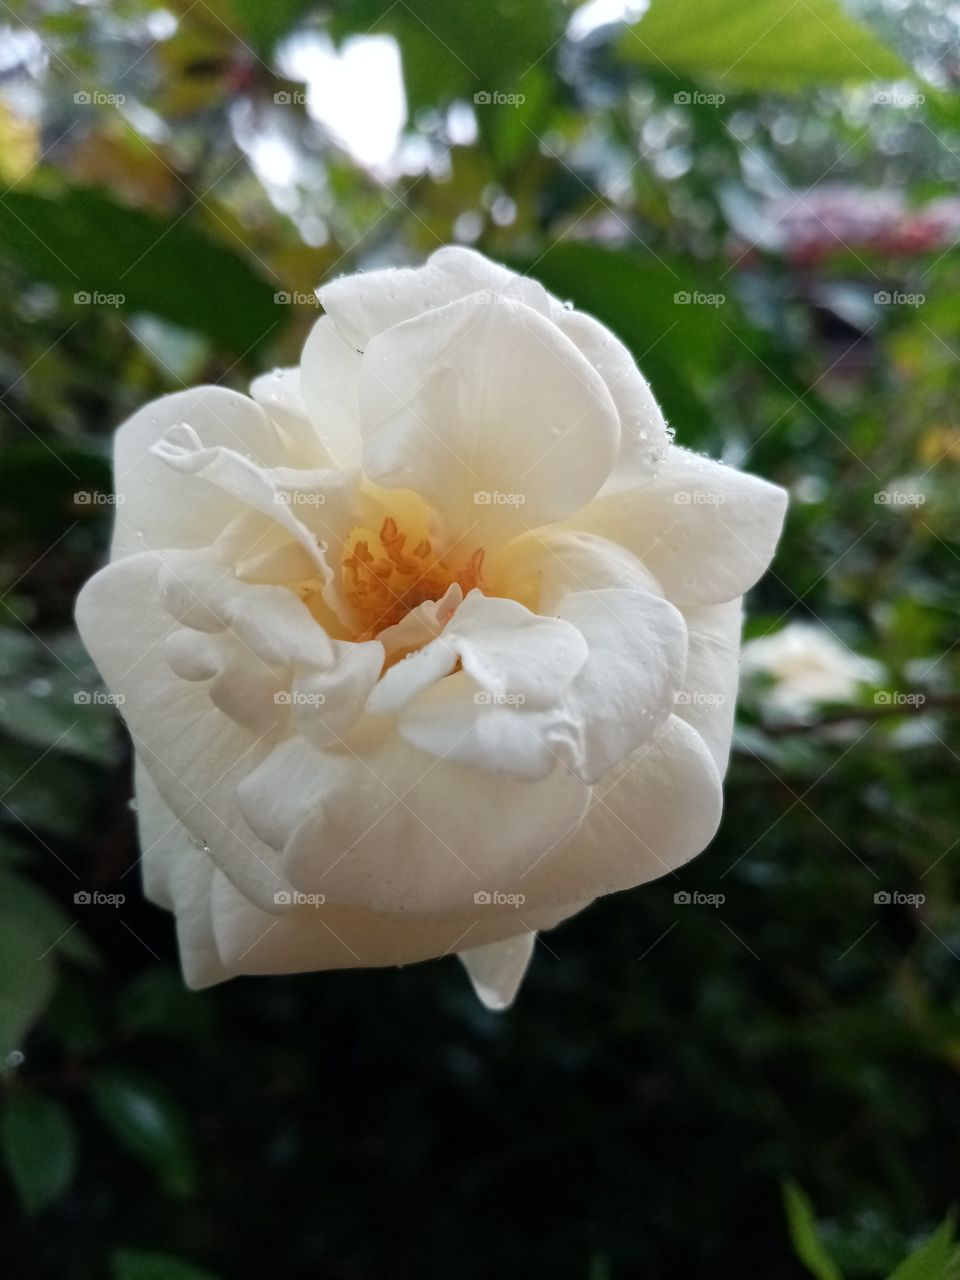 Good morning beautiful rose